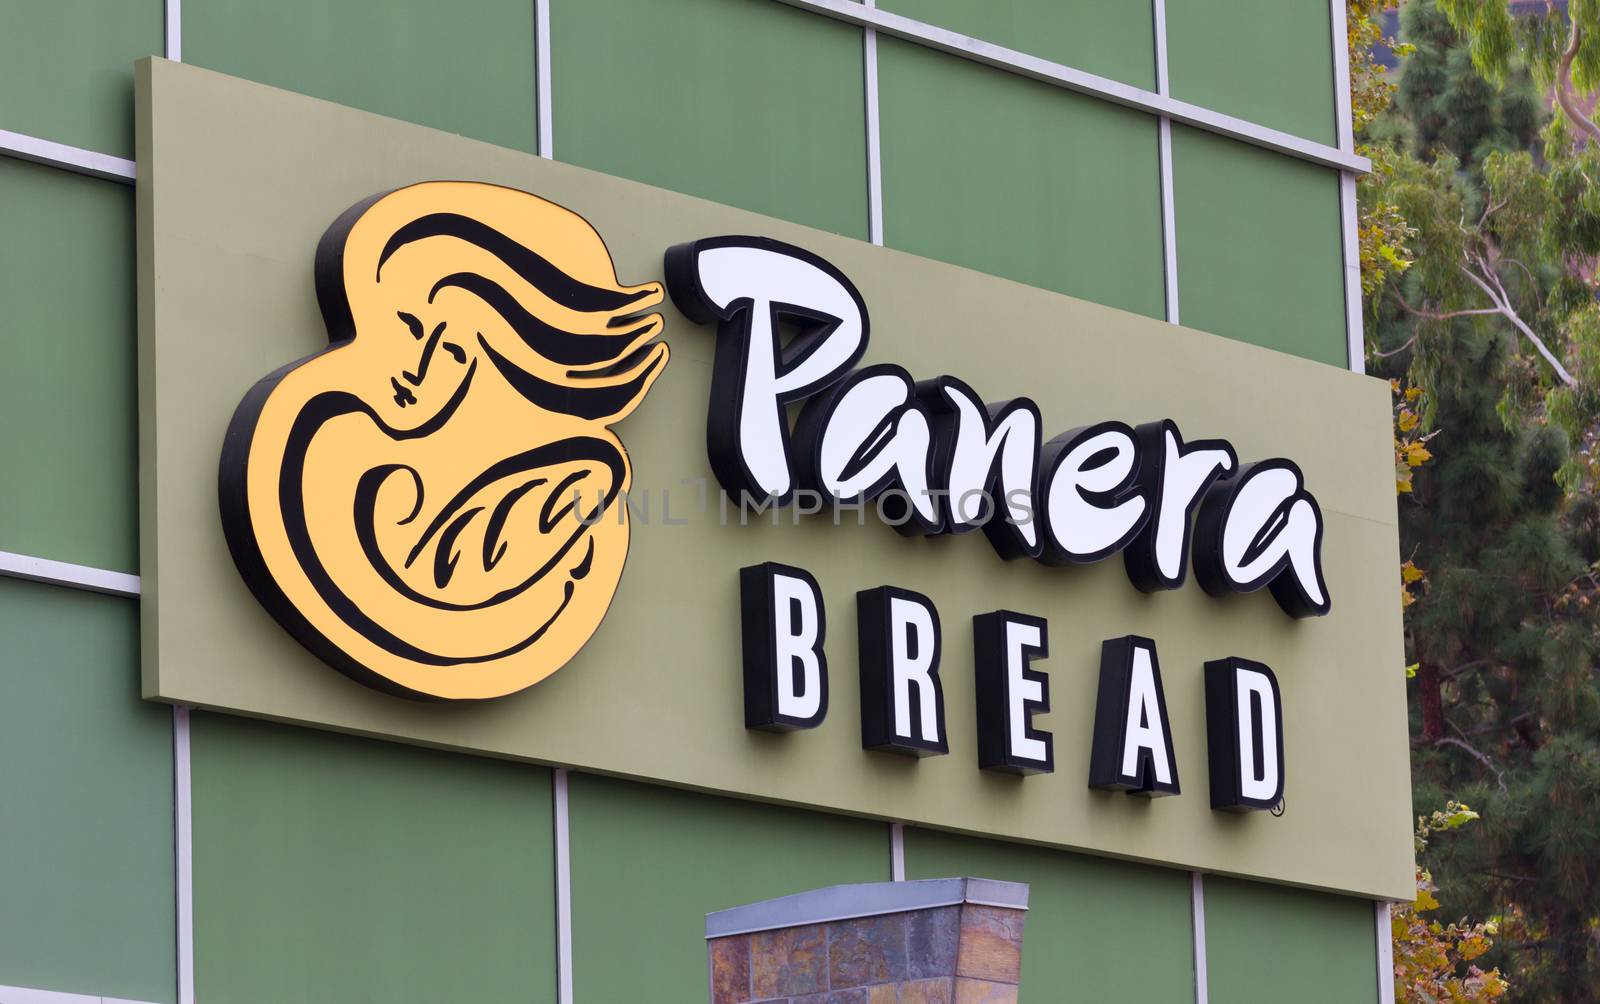 Panera Bread Restaurant Exterior Sign by wolterk